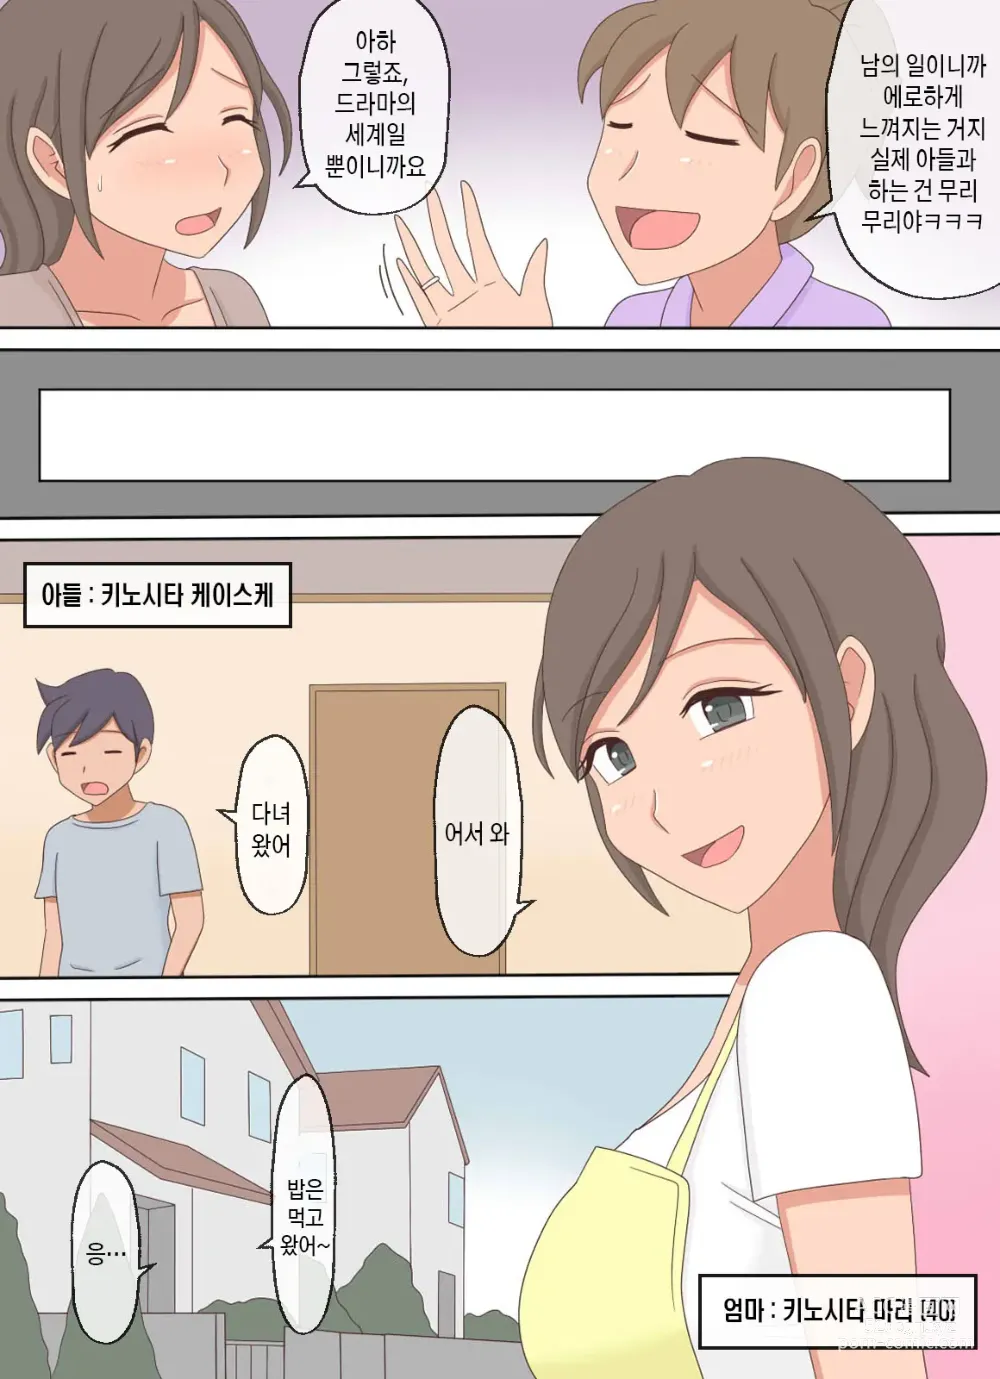 Page 3 of doujinshi 부모자식이 섹스하는 영상을 보다가 아들과 하고 싶어진 이야기